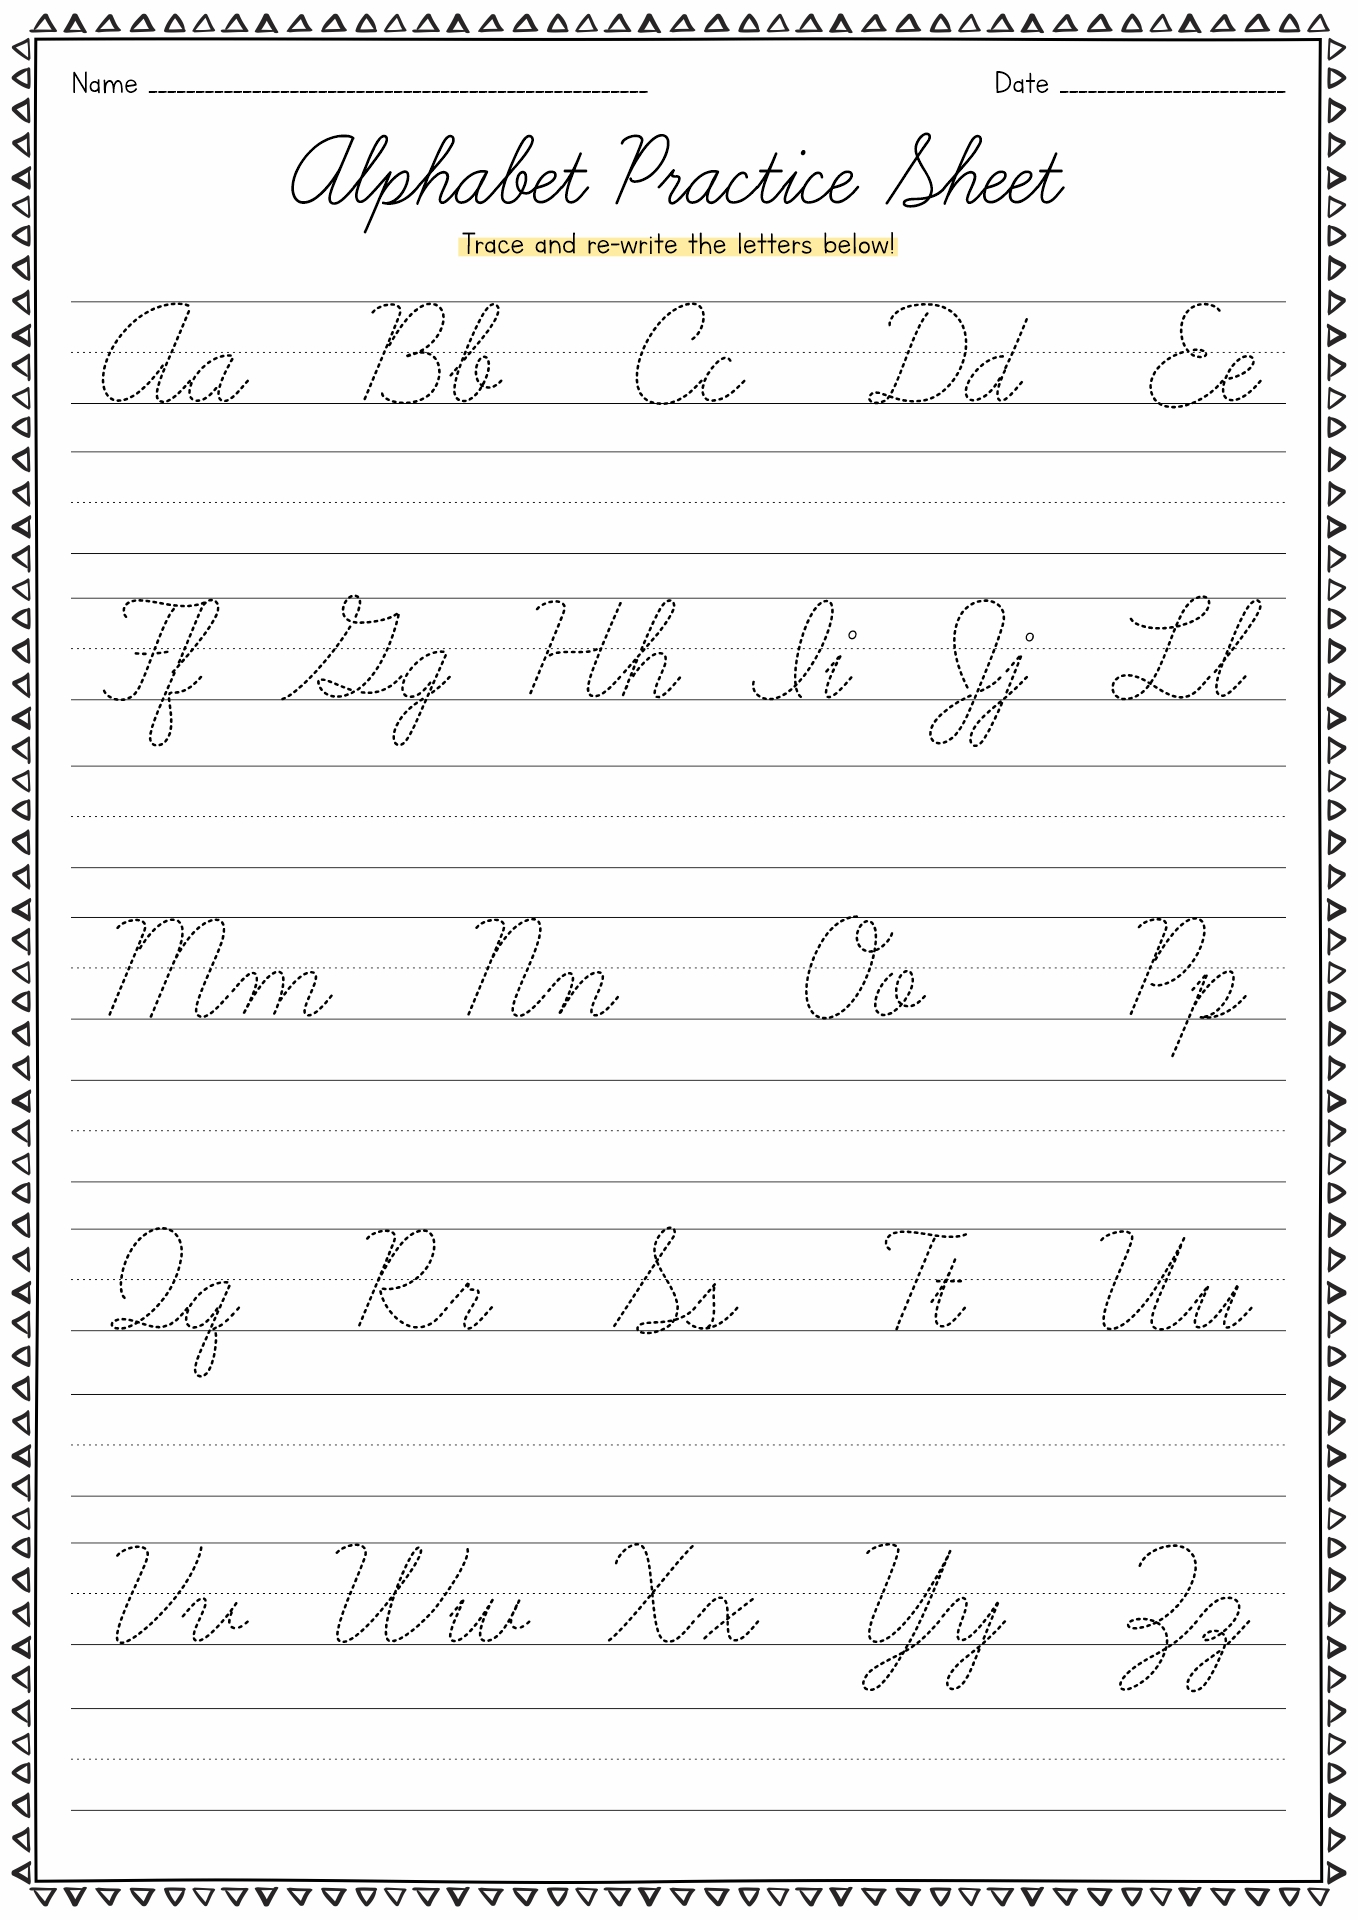 Cursive Writing Practice Letter Worksheets Image